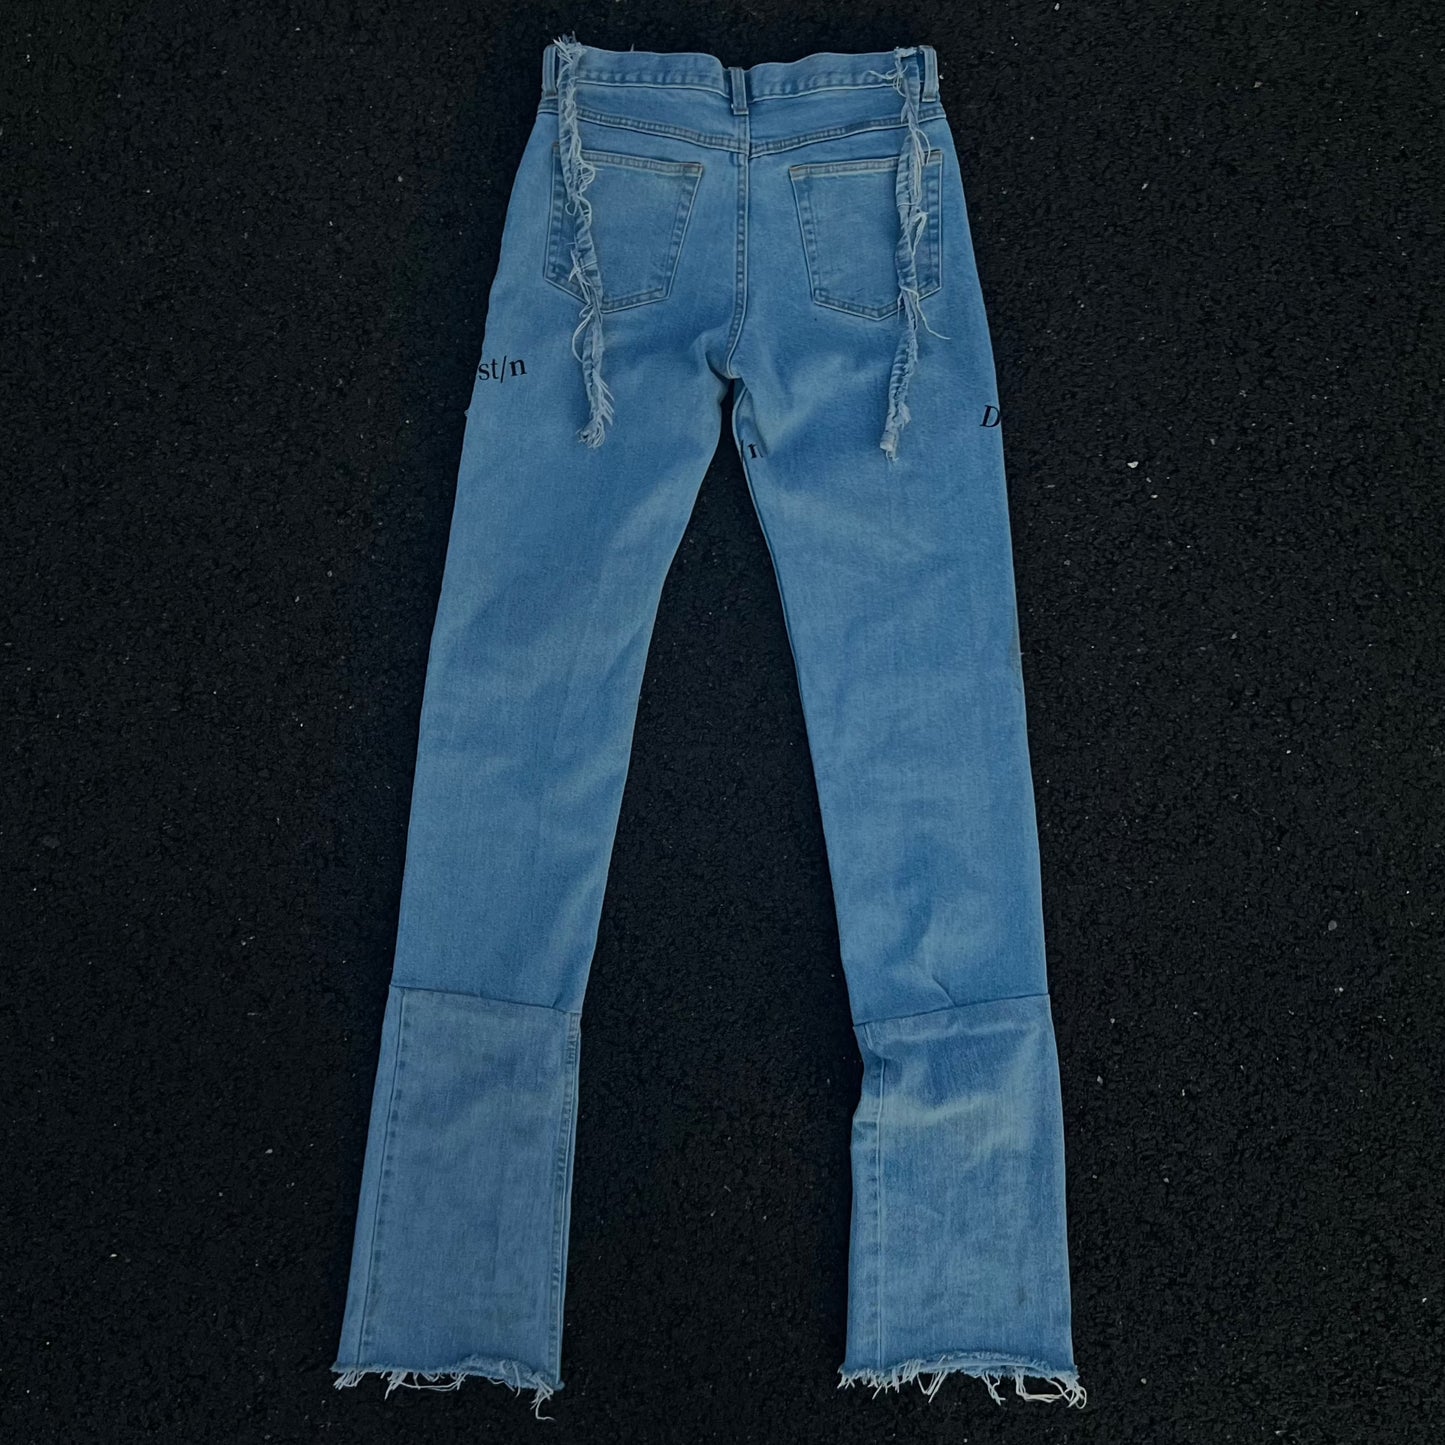 Dest/n Combo Stacked Jeans (Light Blue)